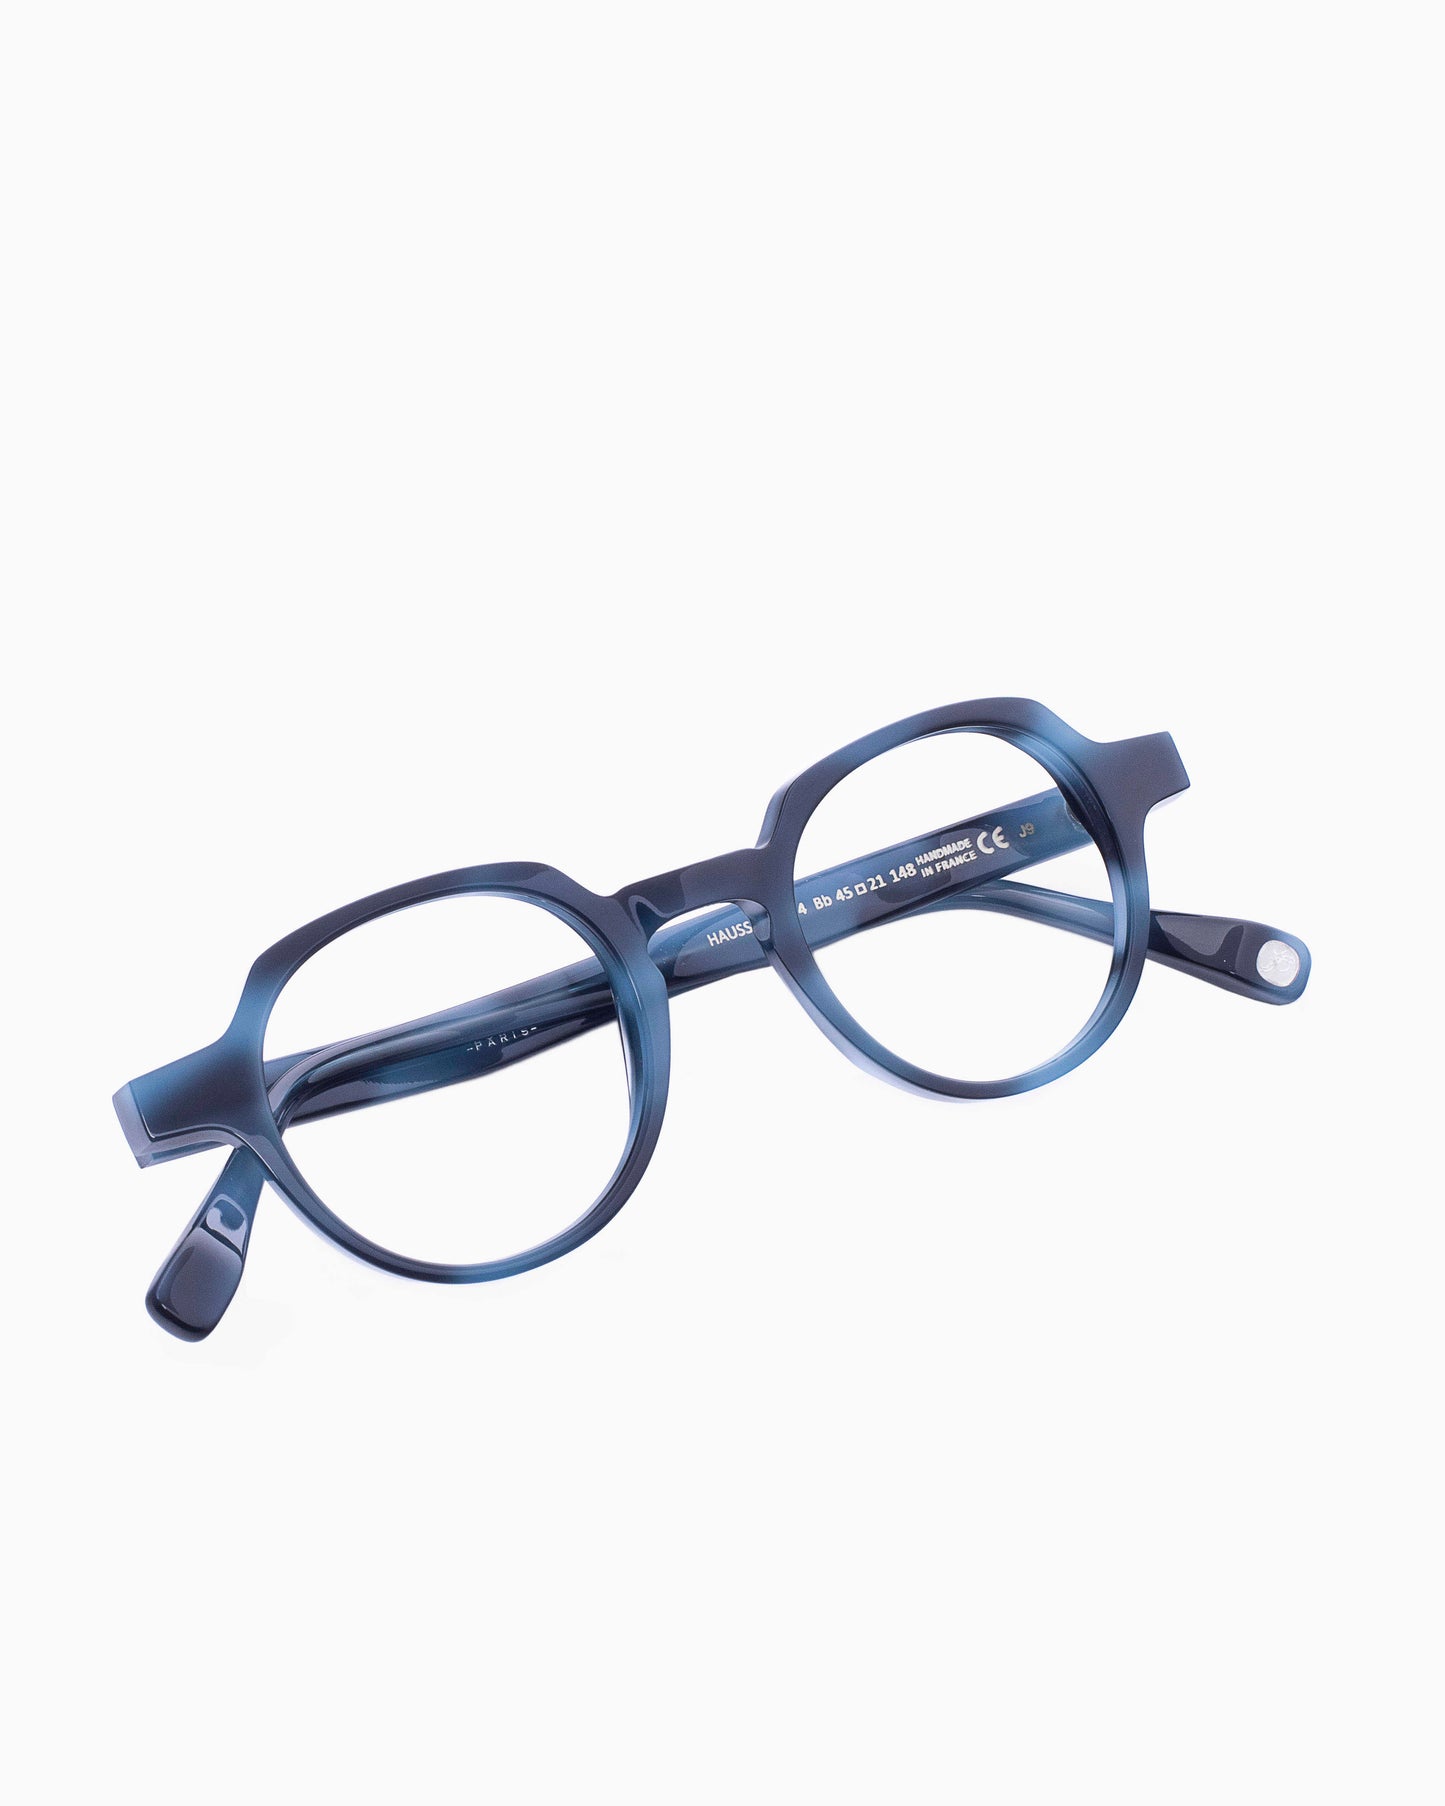 Francois Pinton - Haussmann4 - Bb | glasses bar